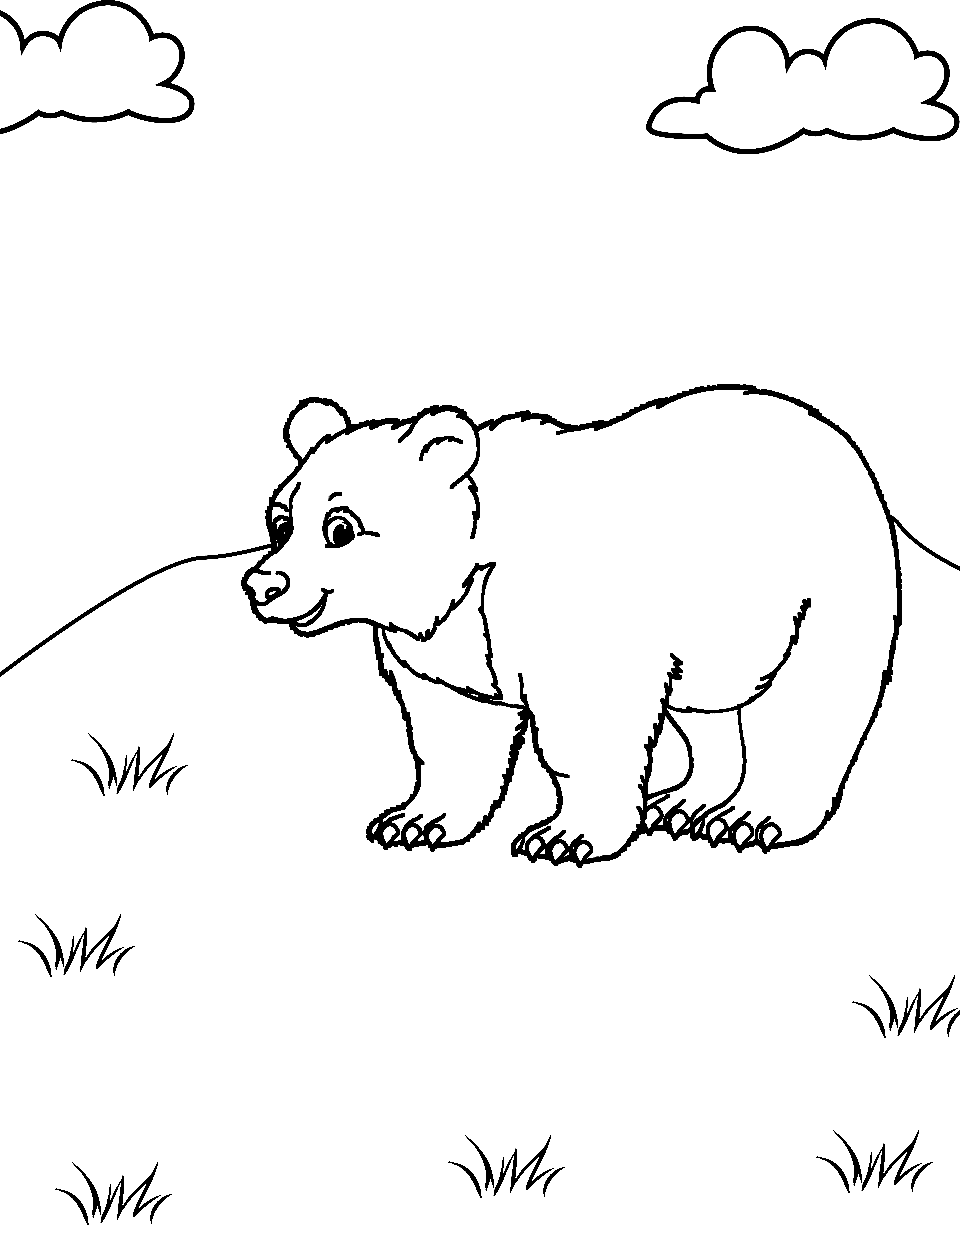 Playful Black Bear Cub Coloring Page - A black bear cub strolling around a grassy hill.